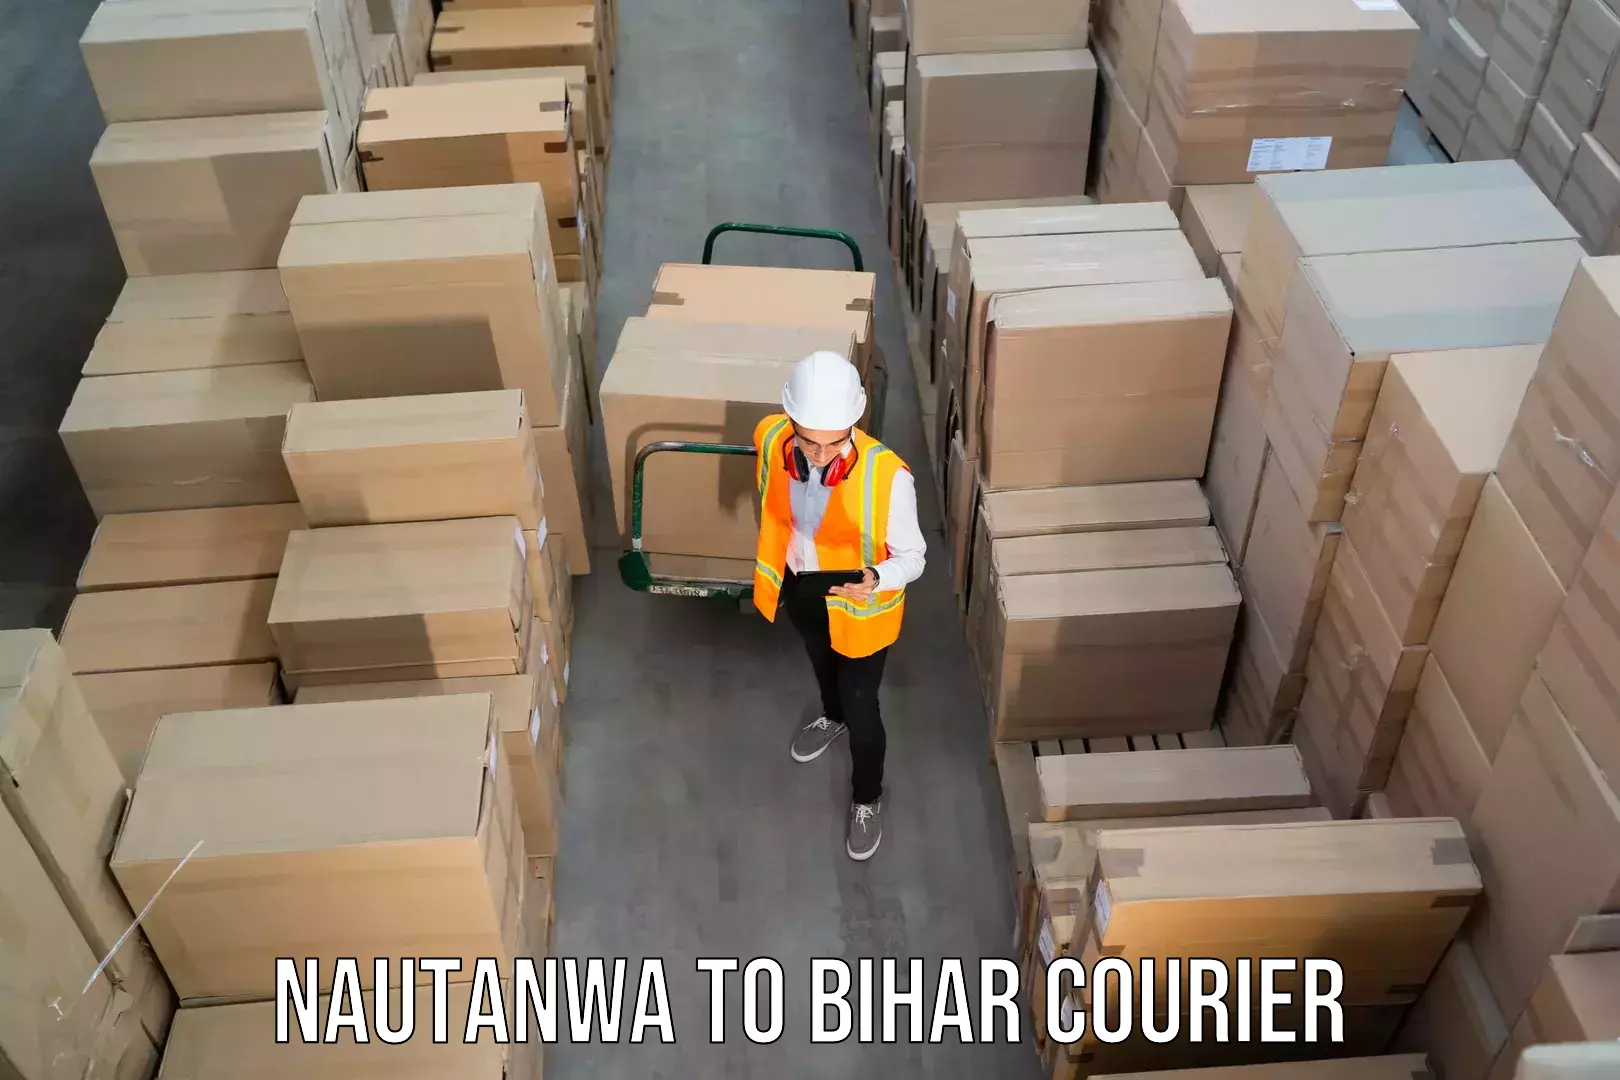 Multi-service courier options Nautanwa to Malmaliya